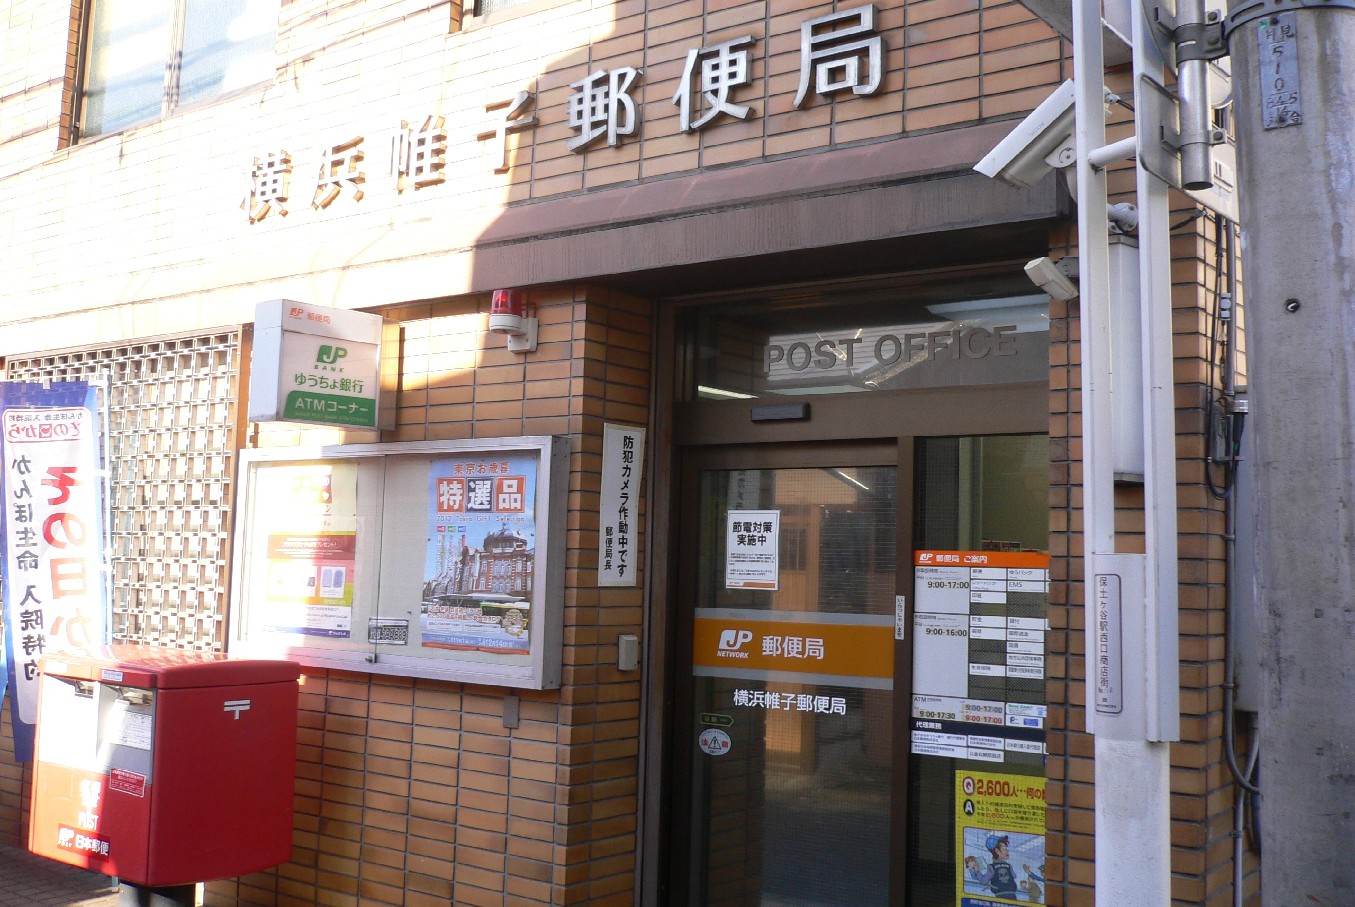 post office. 839m to Yokohama thin morning kimono post office (post office)